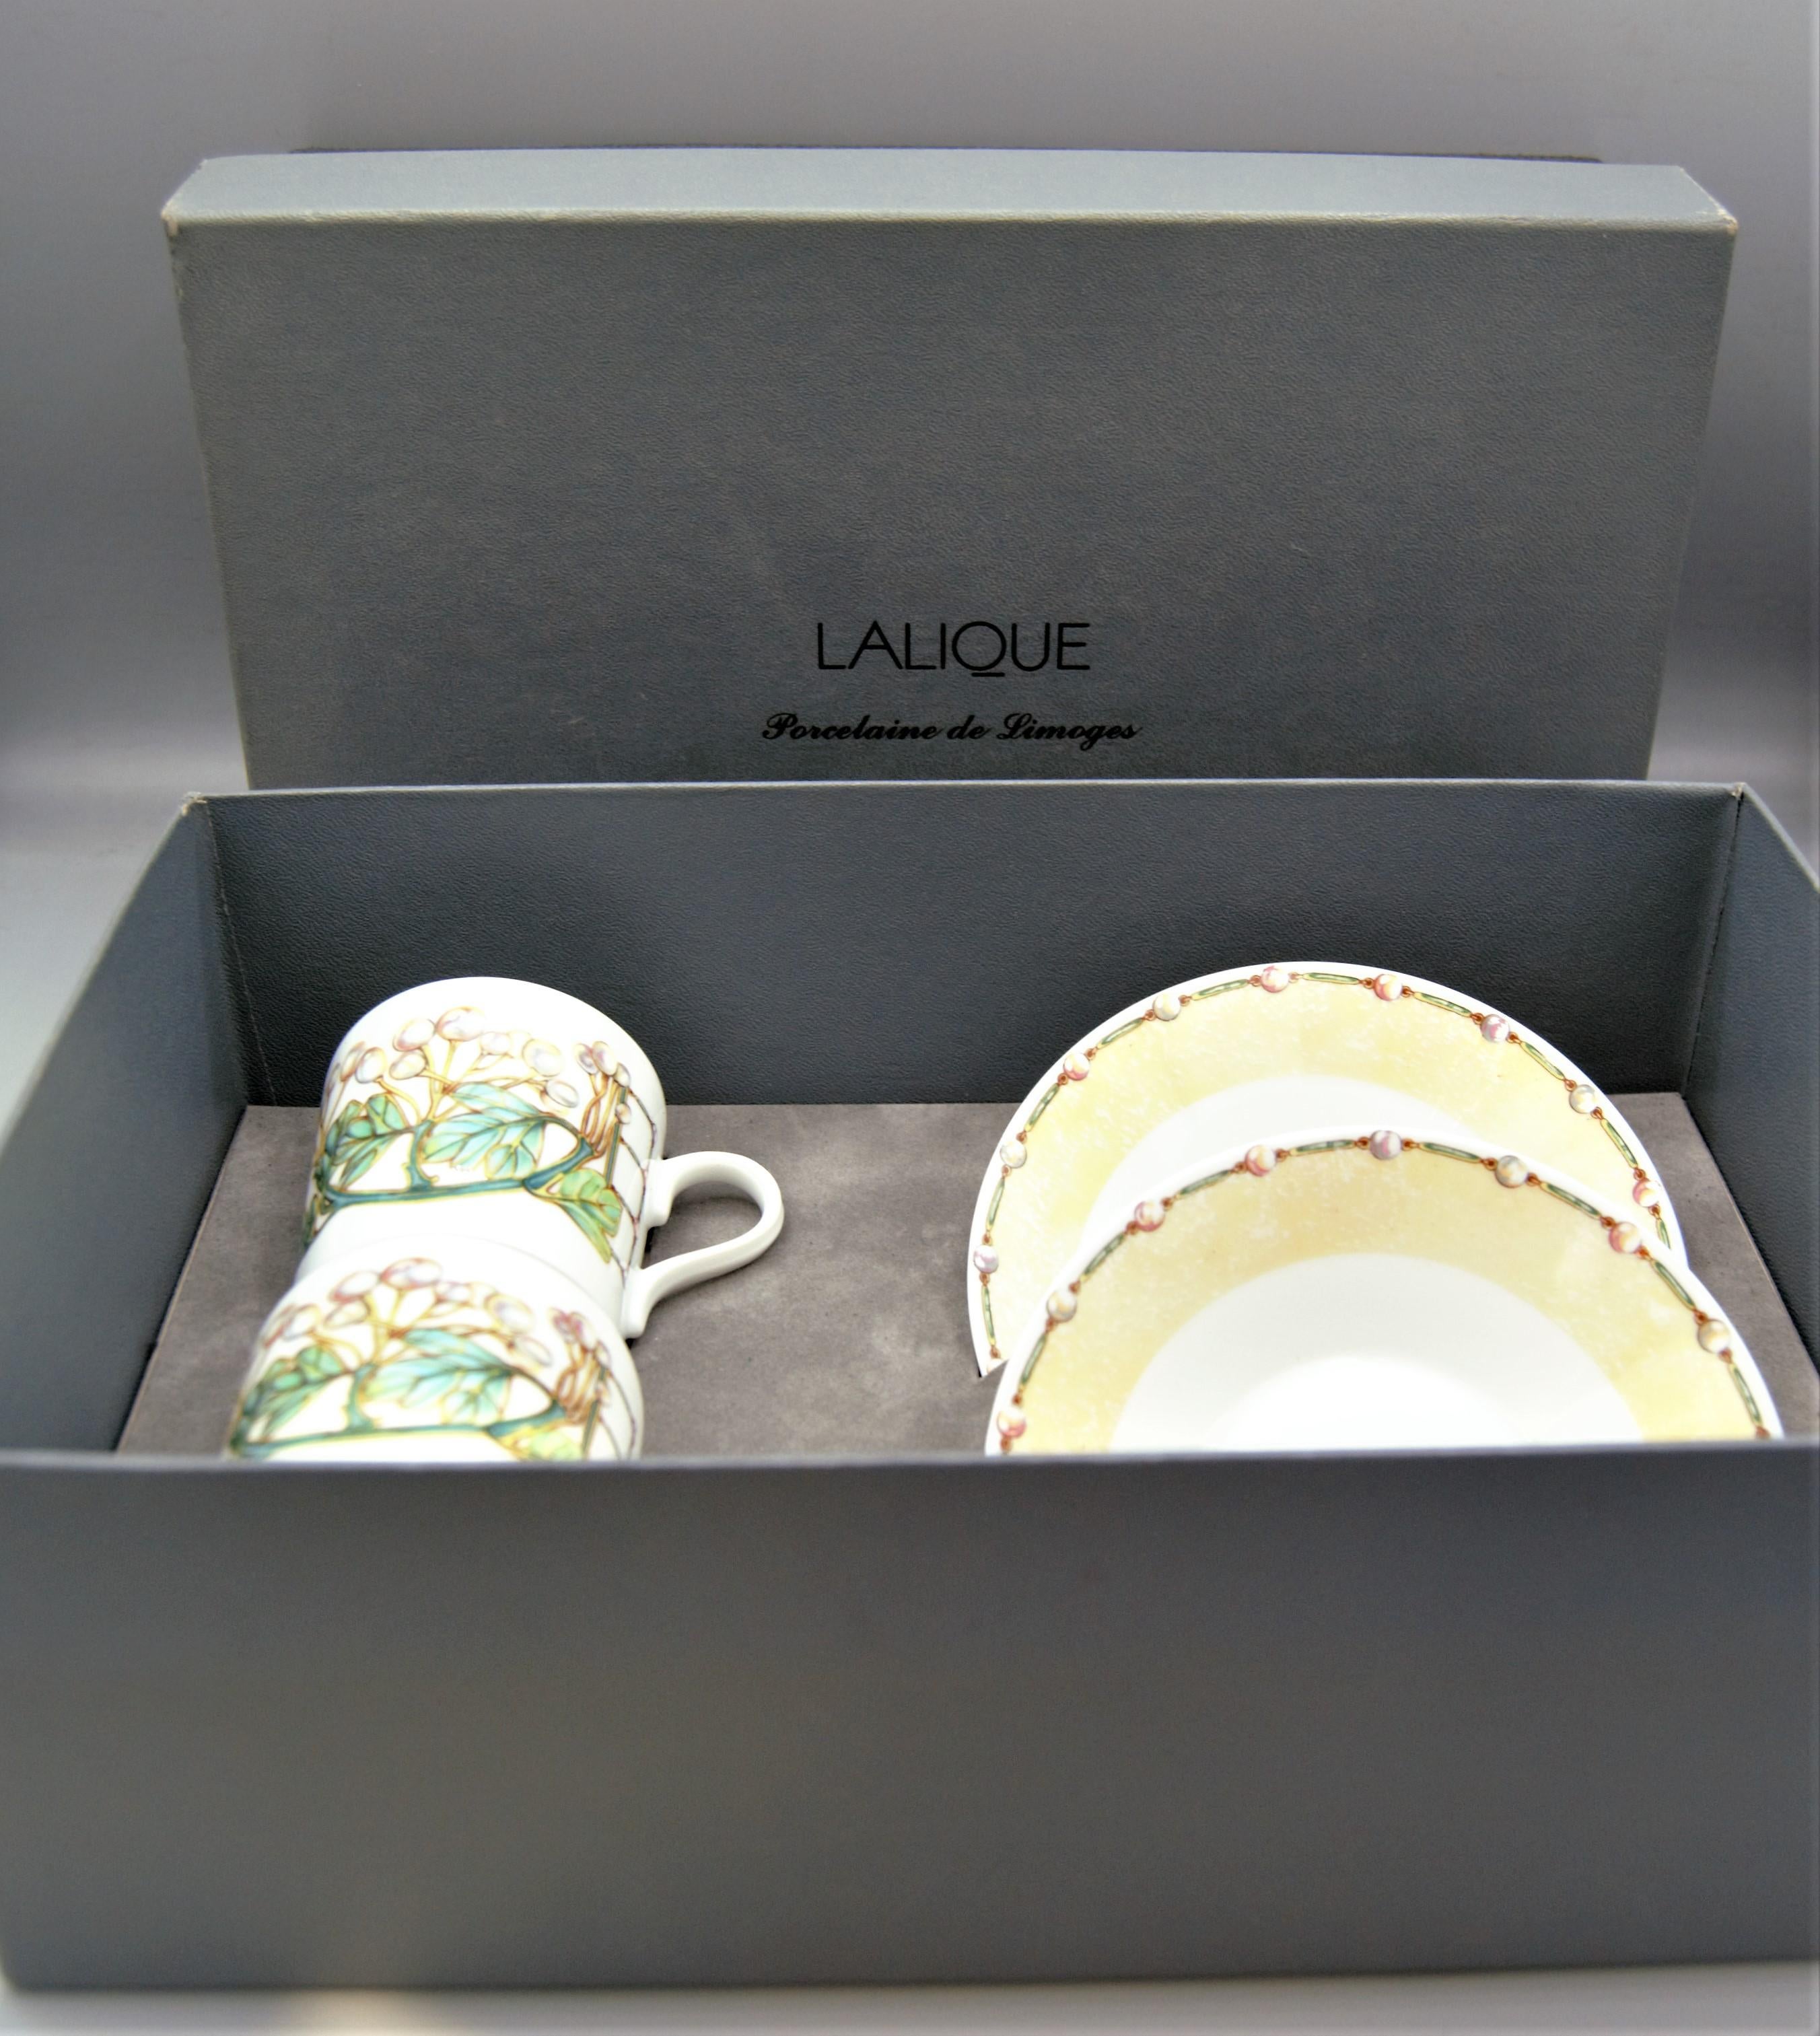 R. Lalique - Limoges porcelain

2 cups and saucers model 